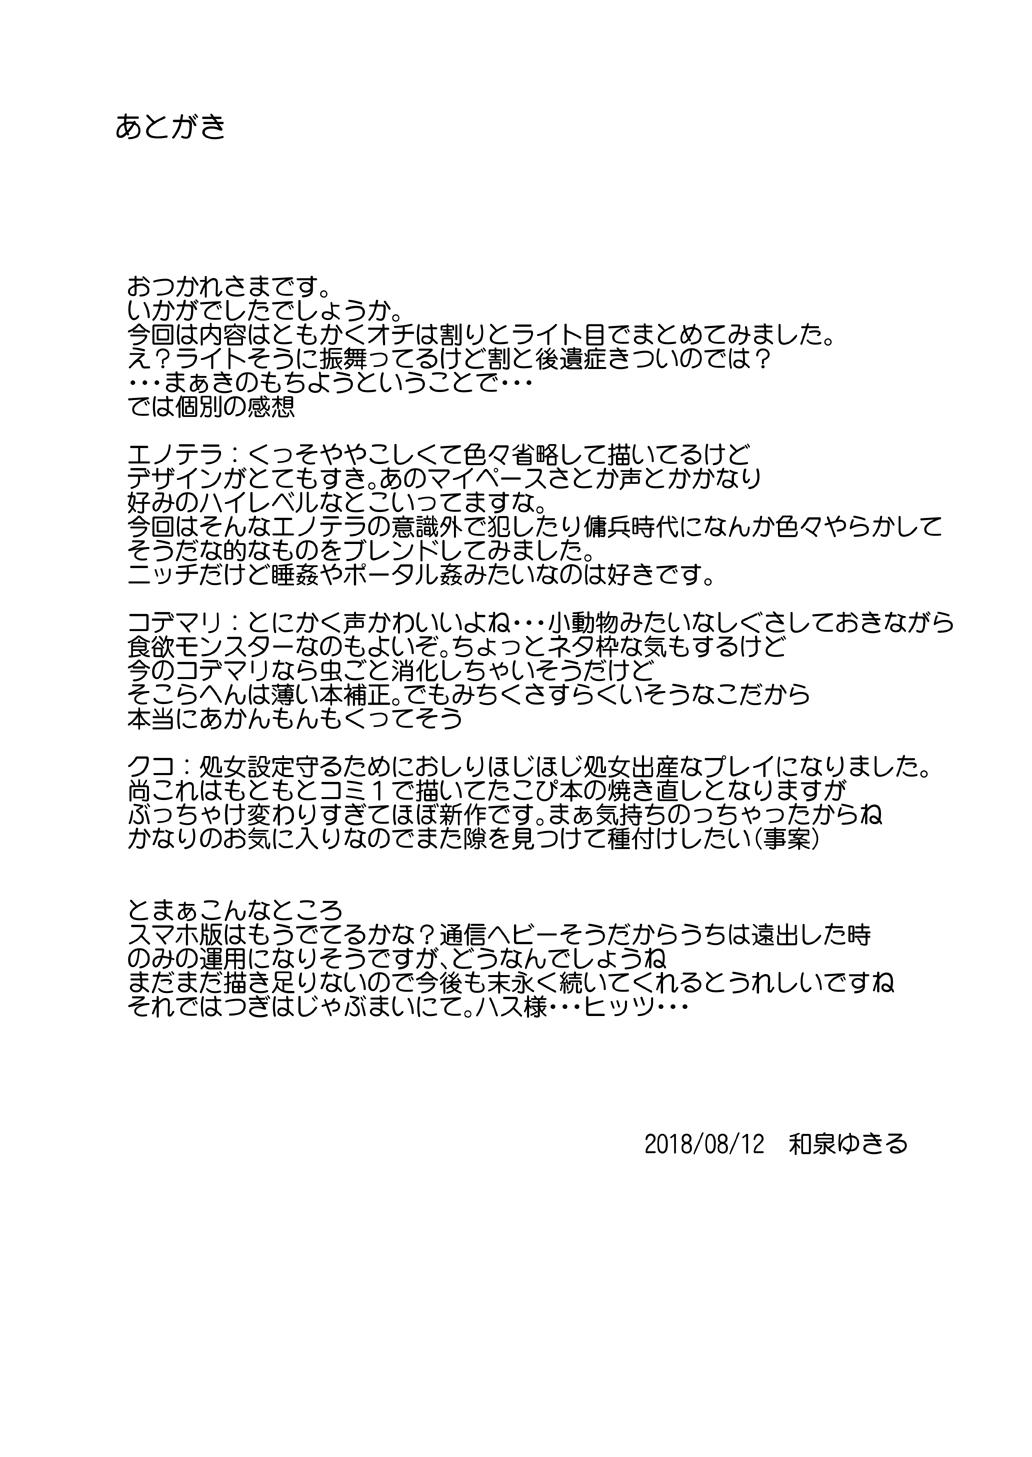 Gaichuu Higai Houkokusho File 2 27